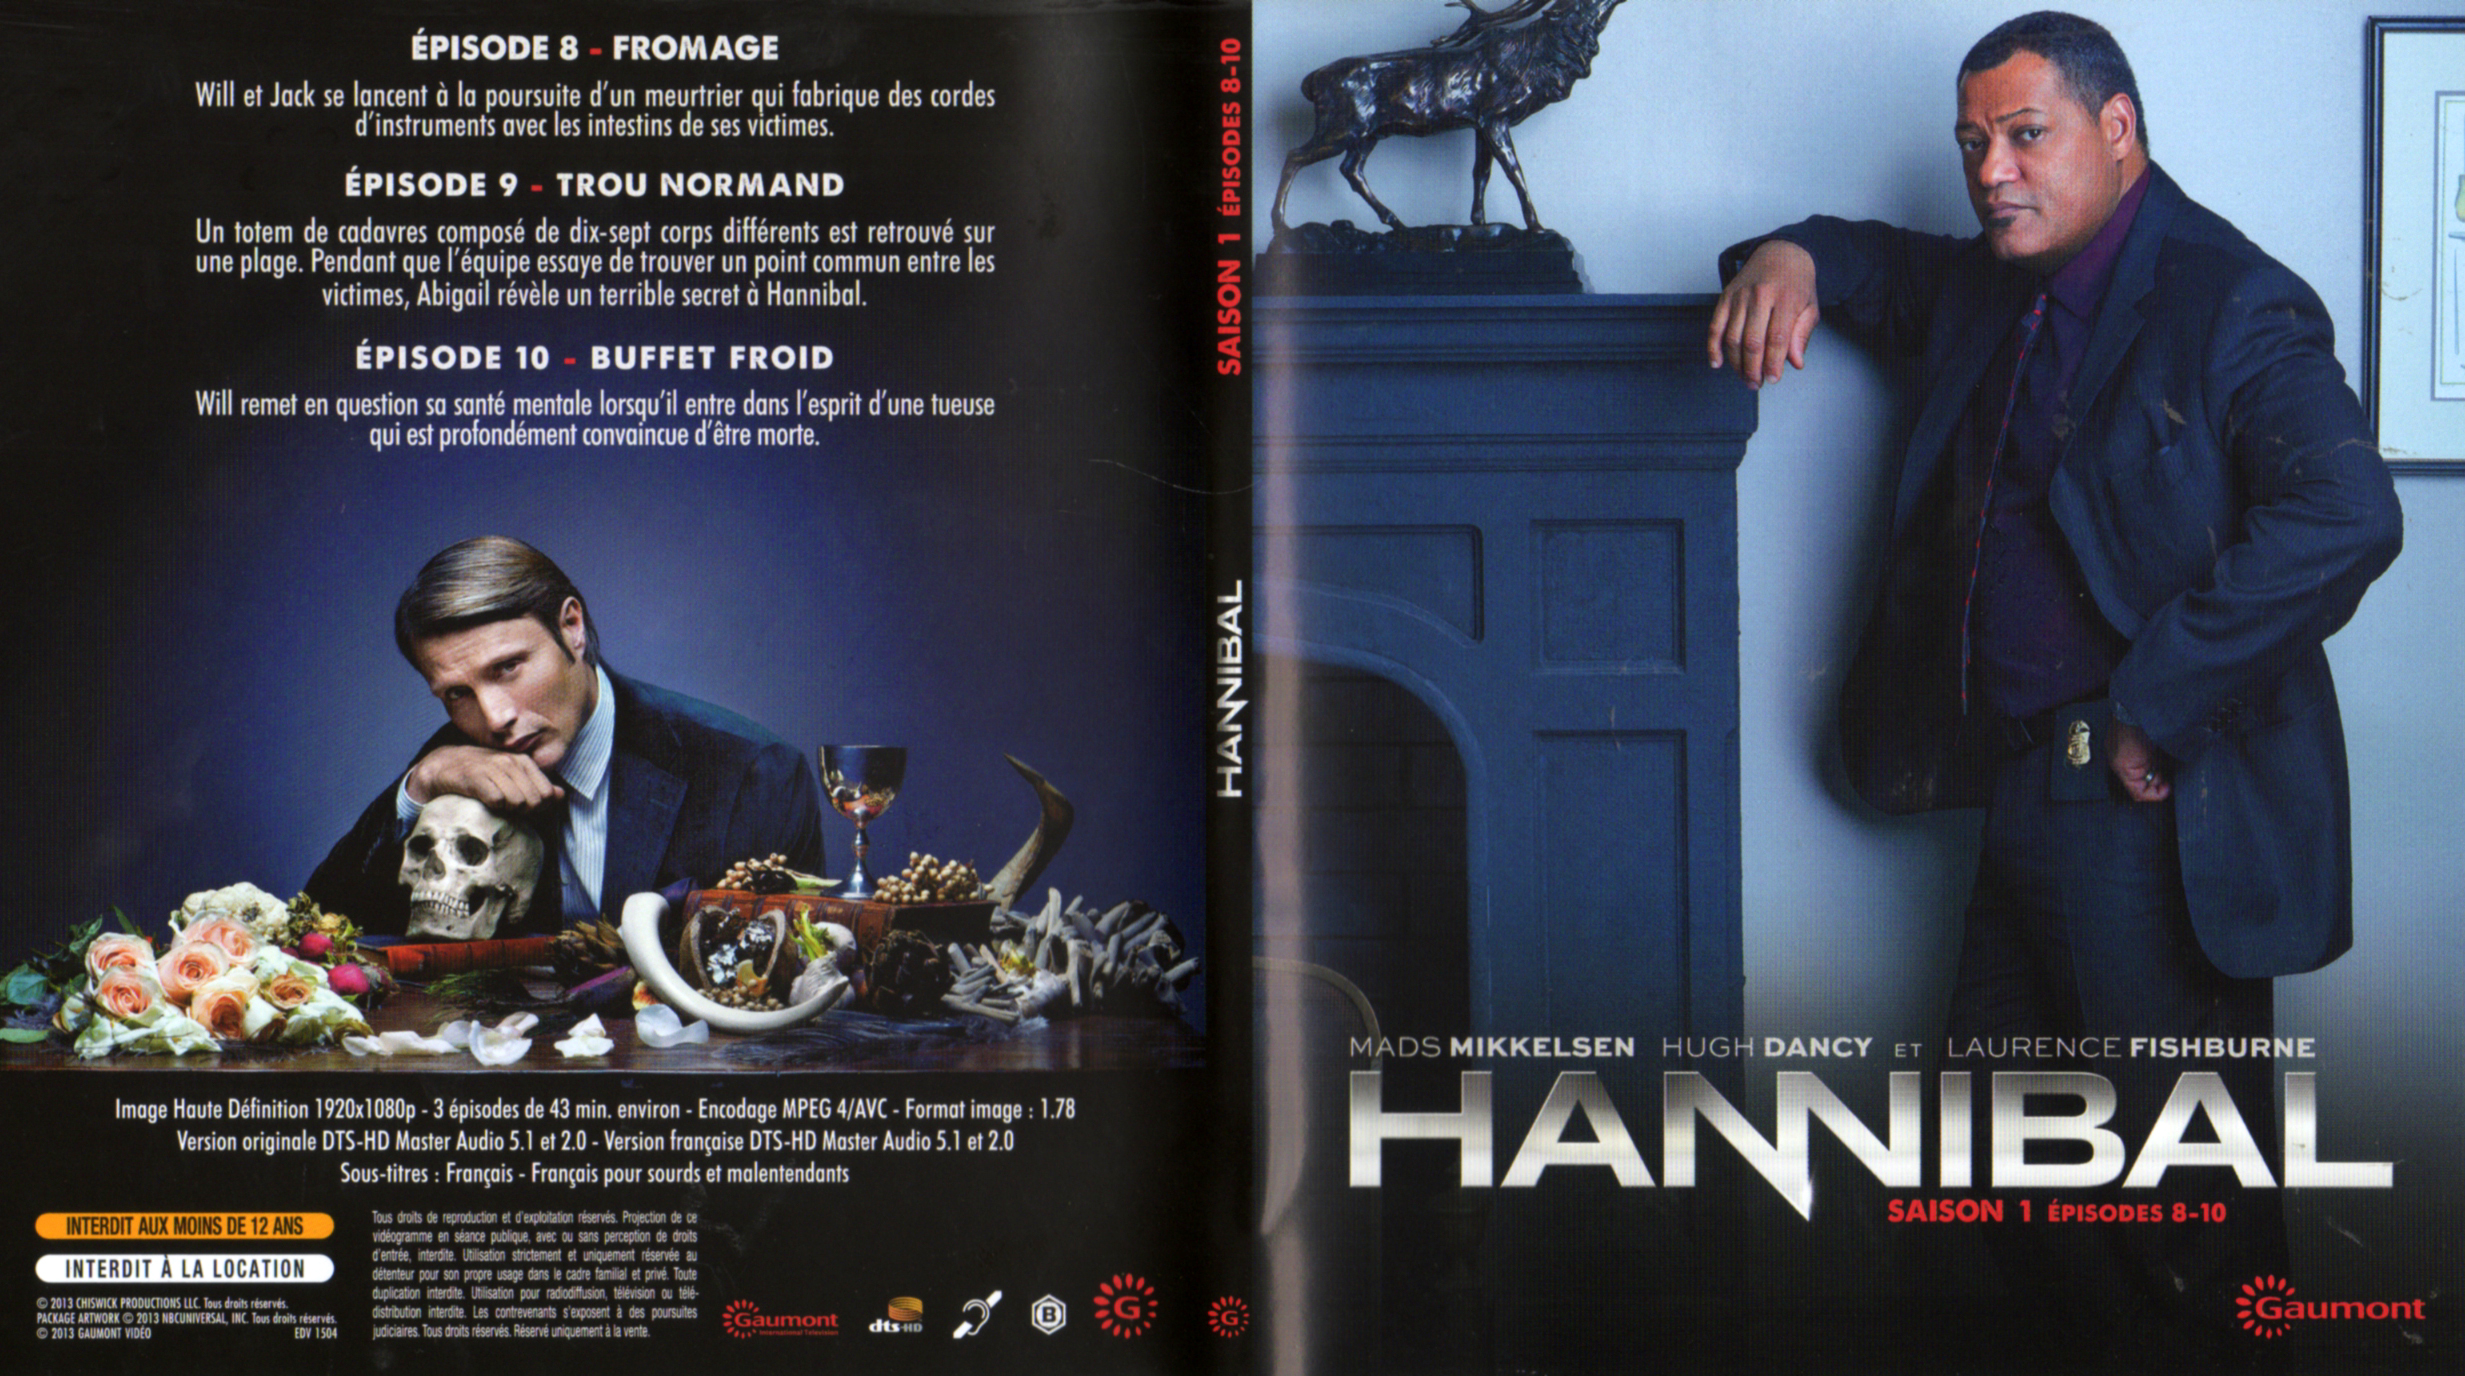 Jaquette DVD Hannibal Saison 1 Ep 8-10 (BLU-RAY)